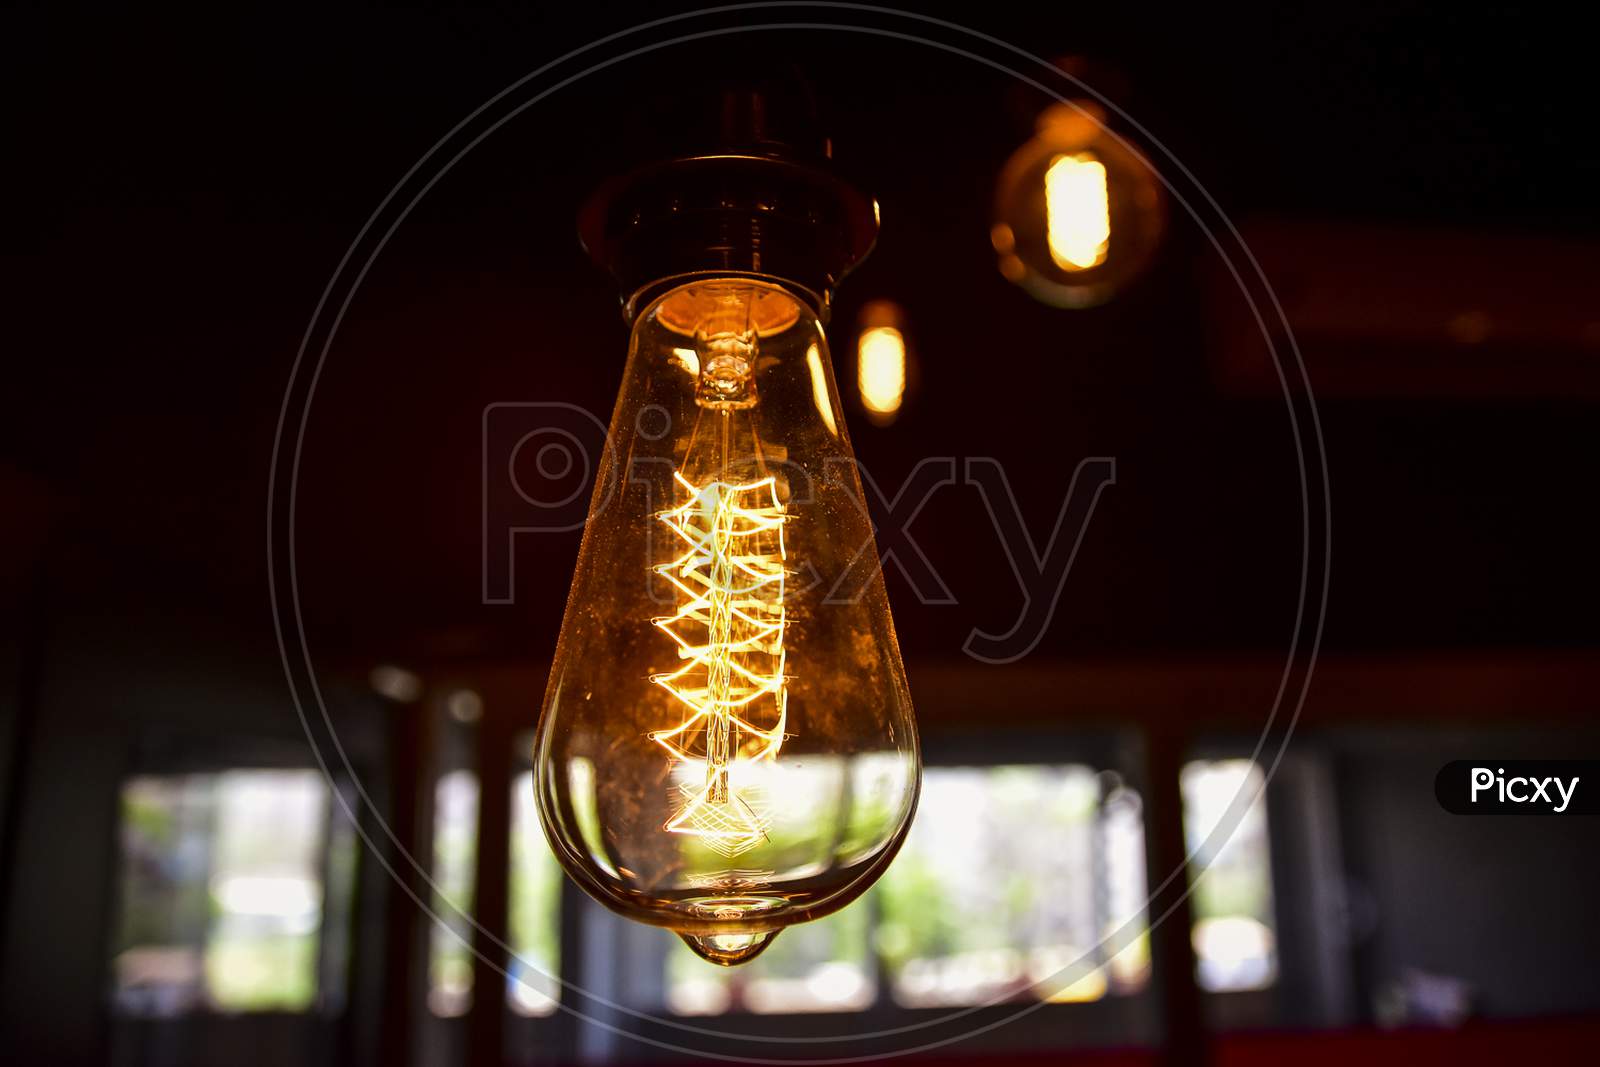 Electric filament Bulb  In a Cafe Interior